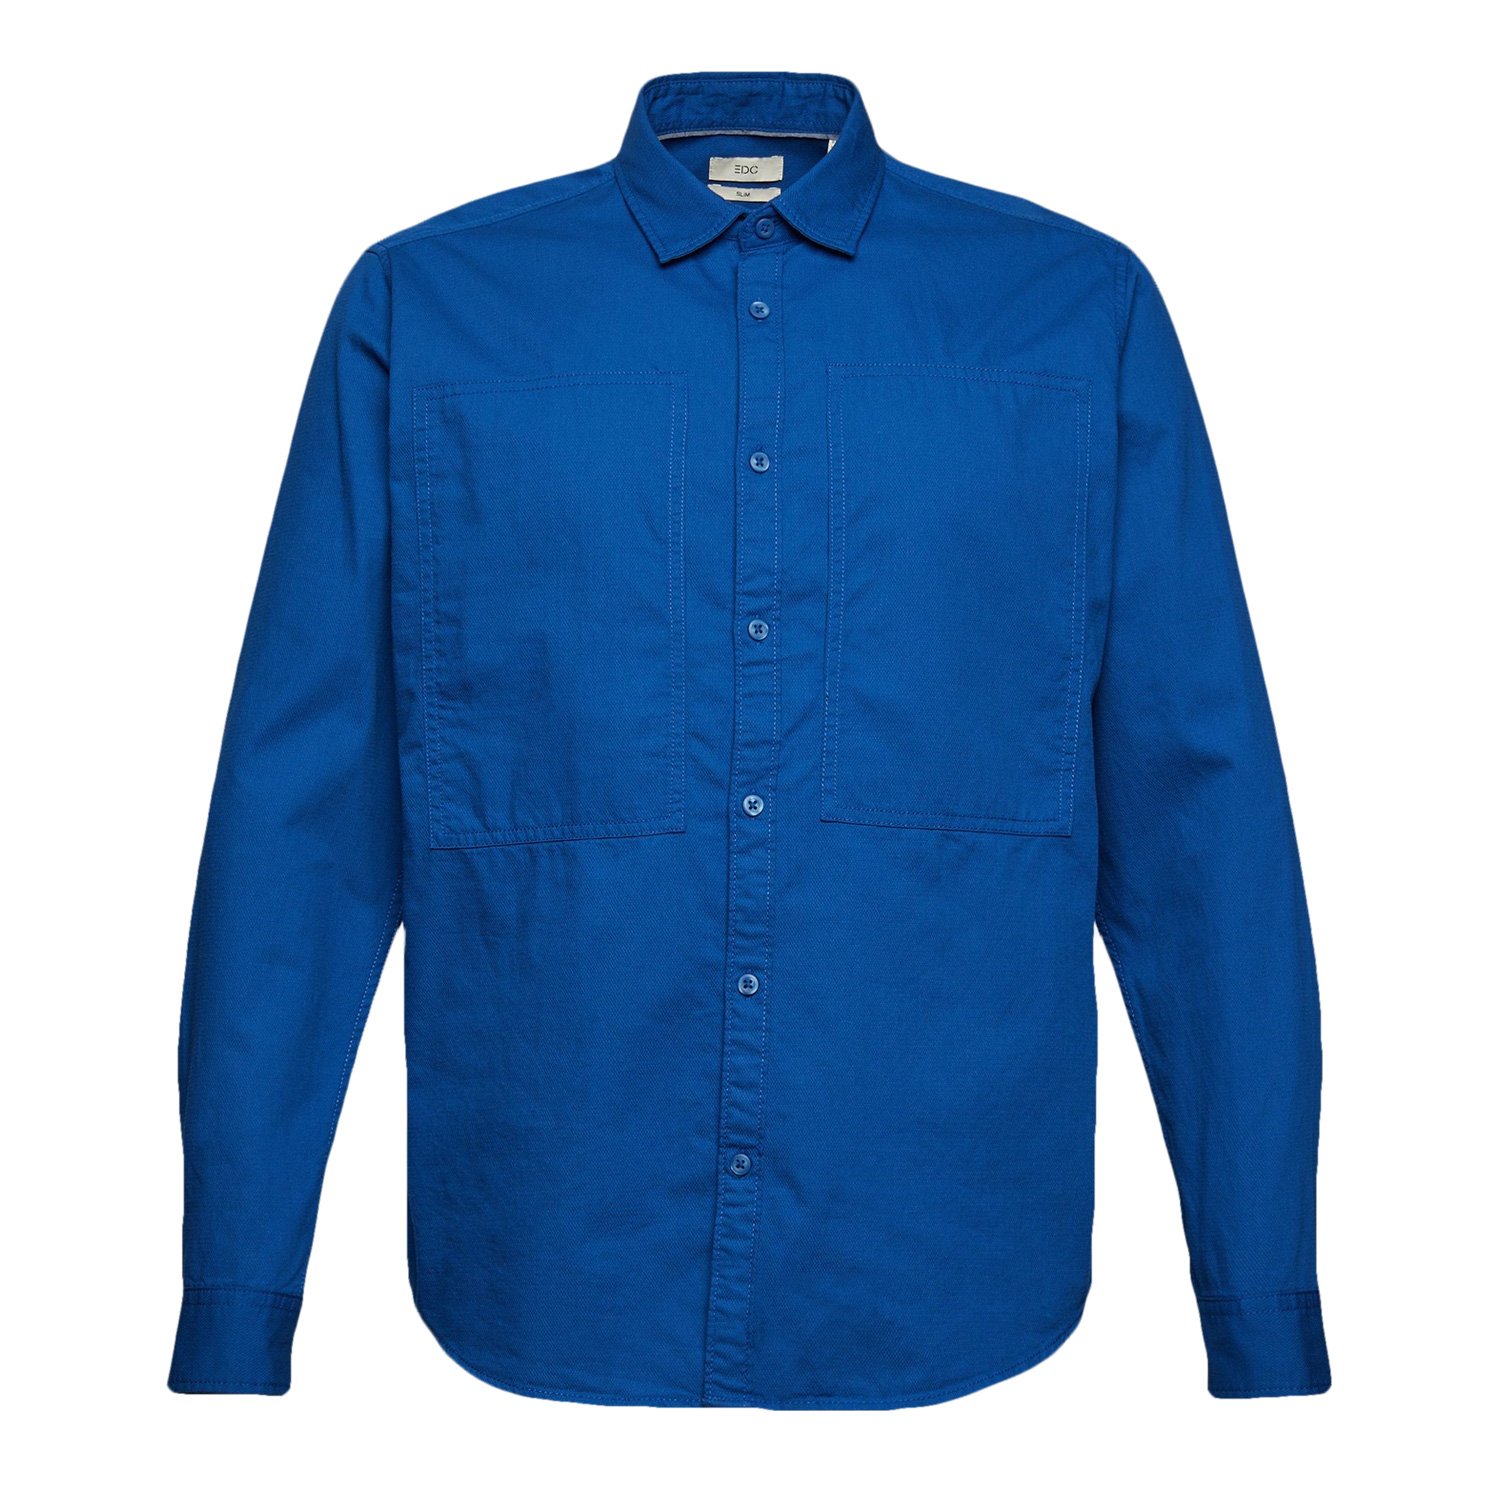 Esprit Mens Shirt Slim Fit Soft Textured Woven 100% Cotton Button Up ...